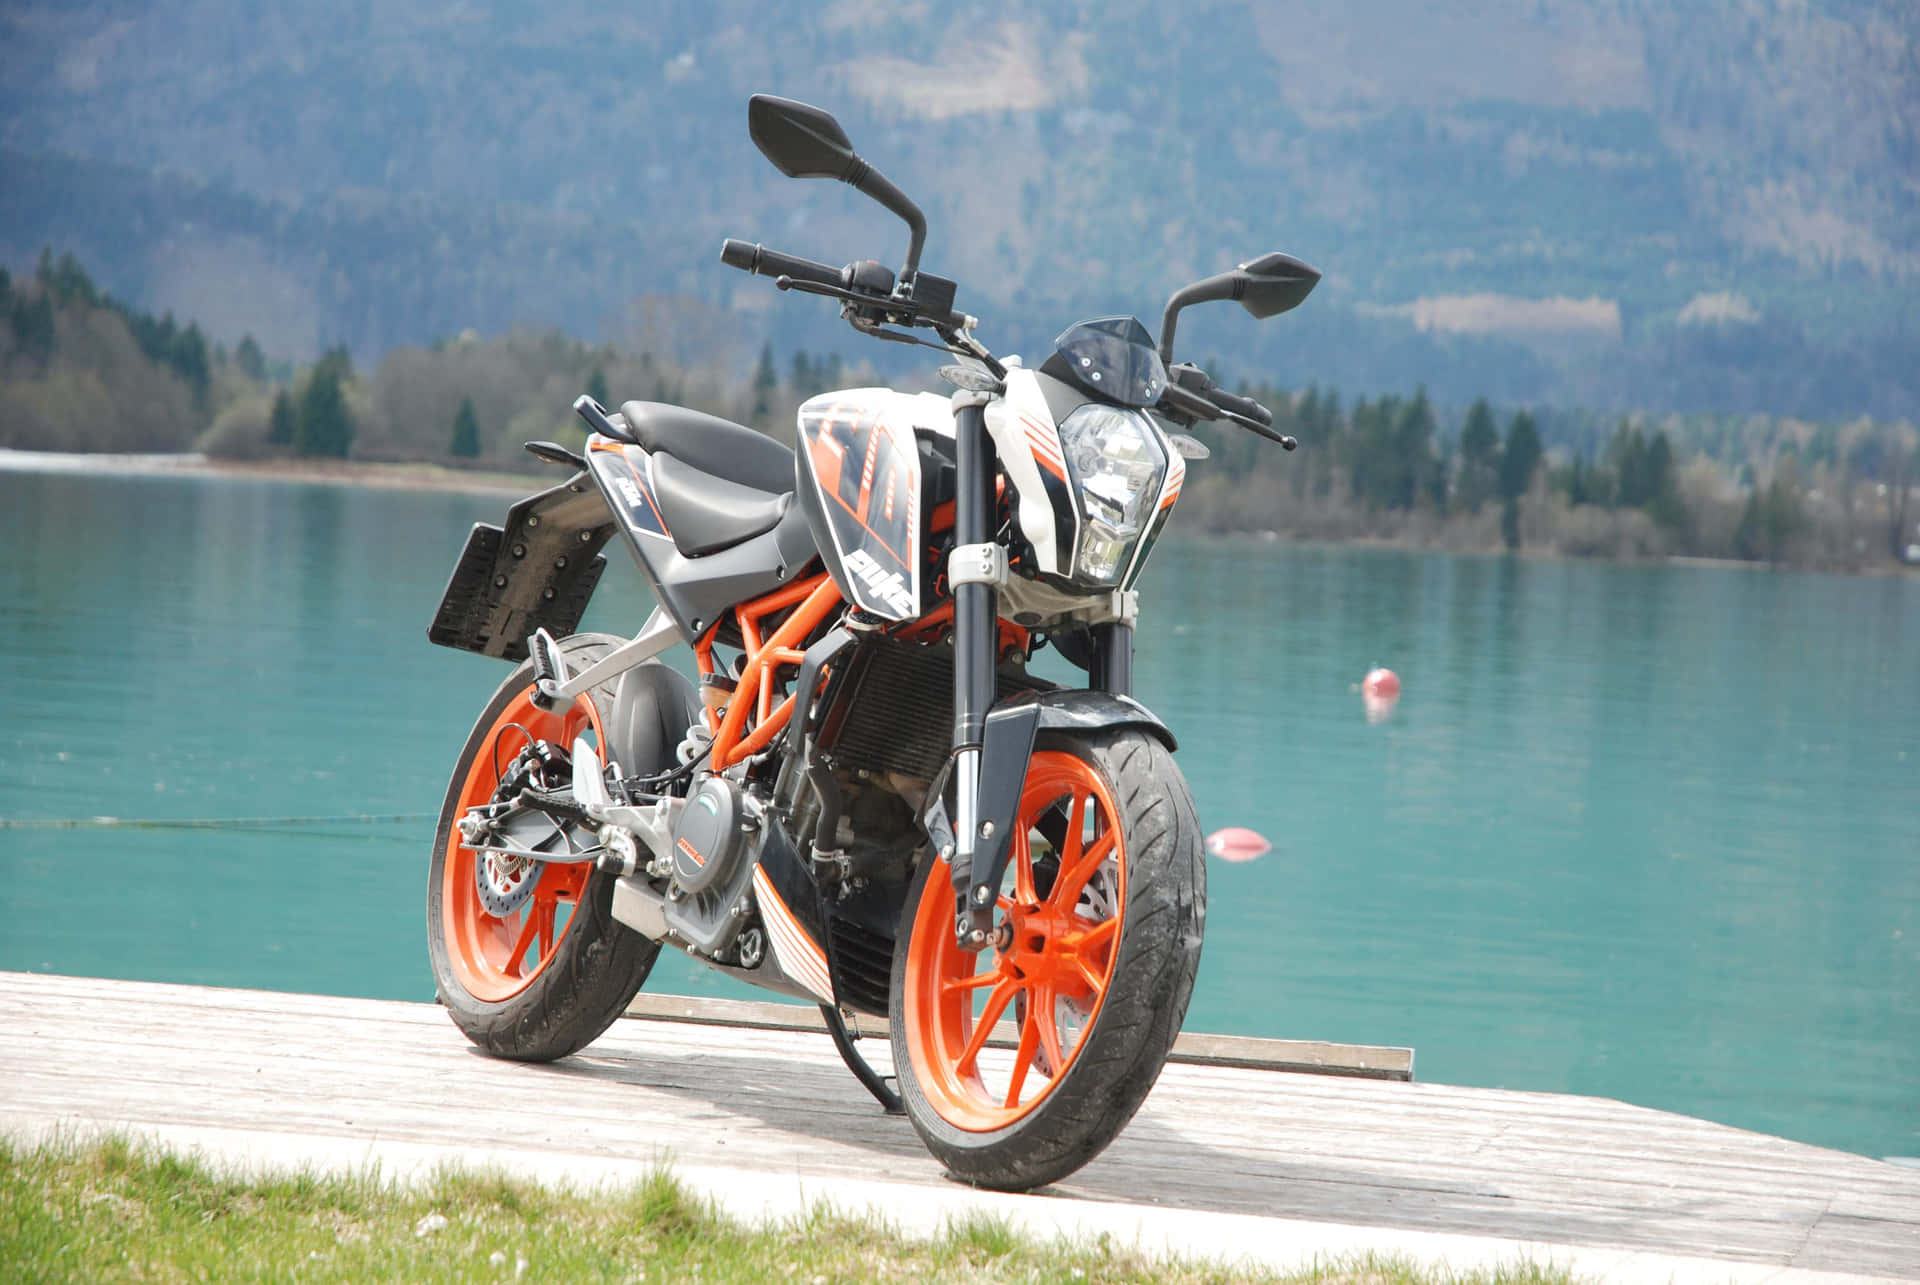 The Duke390 - A Powerful Motorbike